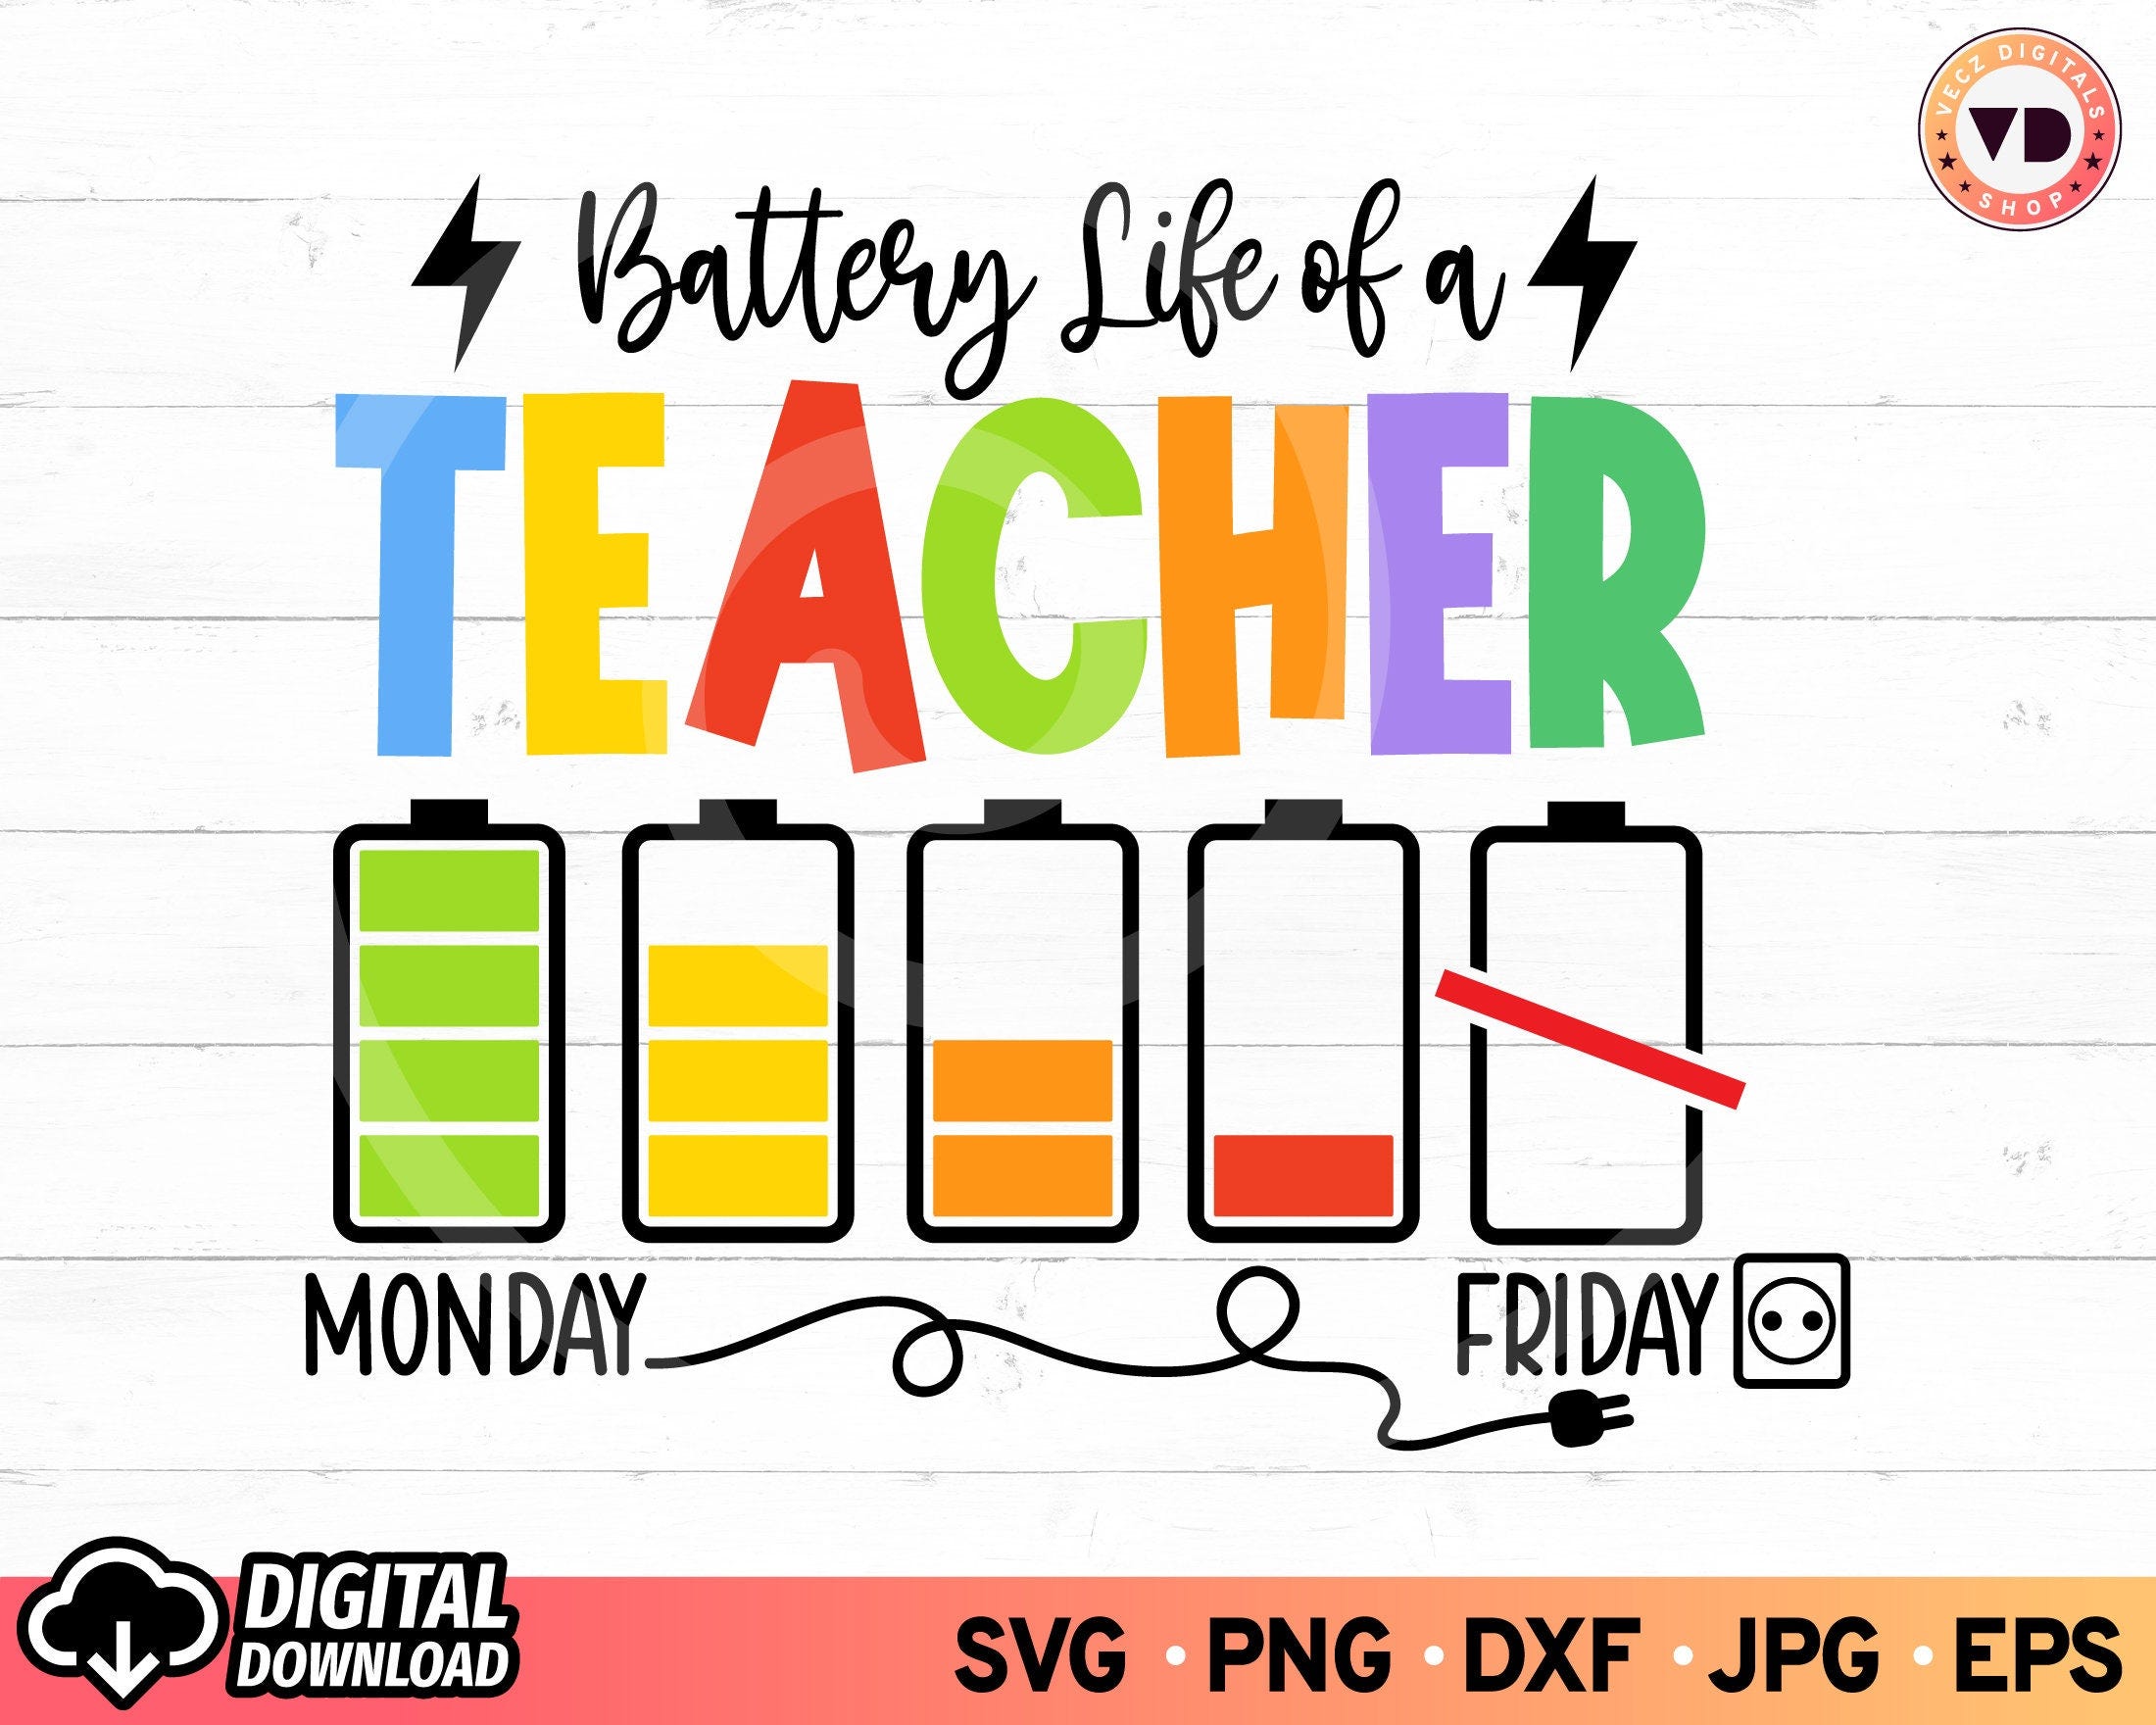 Battery Life of a Teacher SVG, Funny Christmas Svg, Teacher Appreciation Gift Ideas, Teacher Svg, Back to School, SVG Files for Cricut